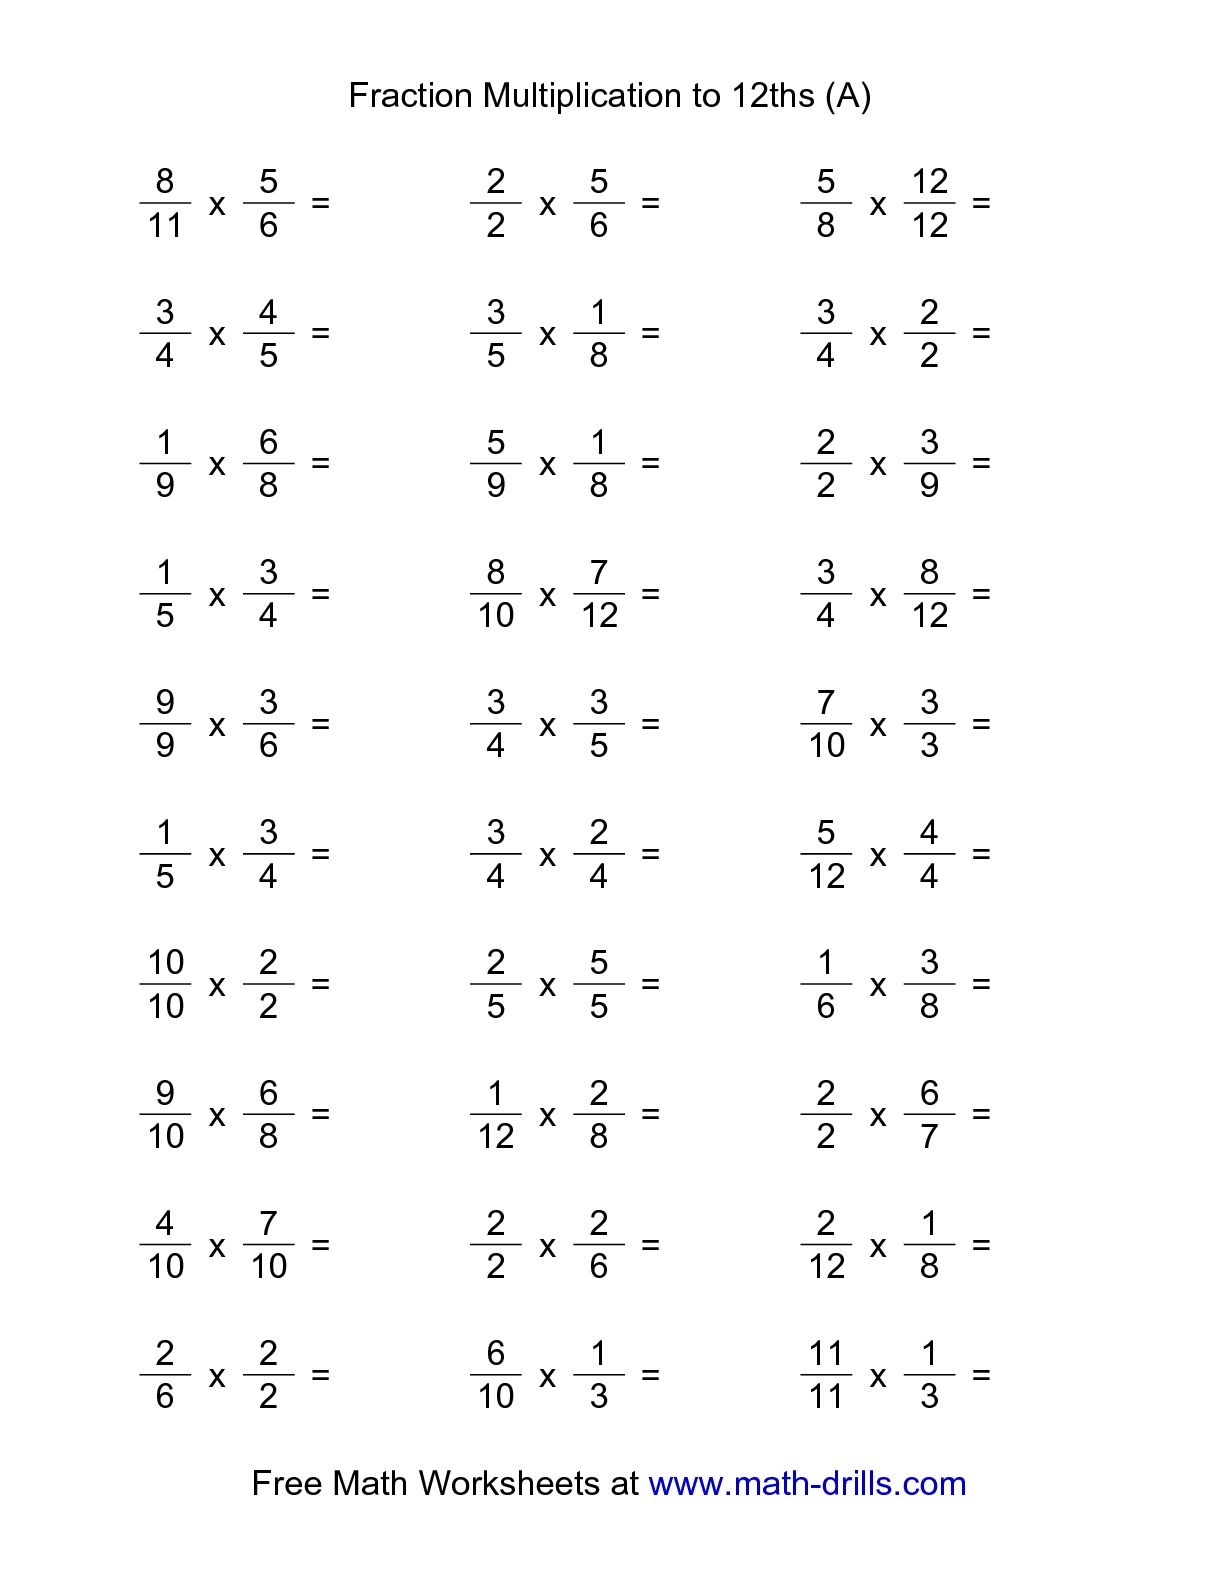 Multiplying Fractions Worksheets 6th Grade Image